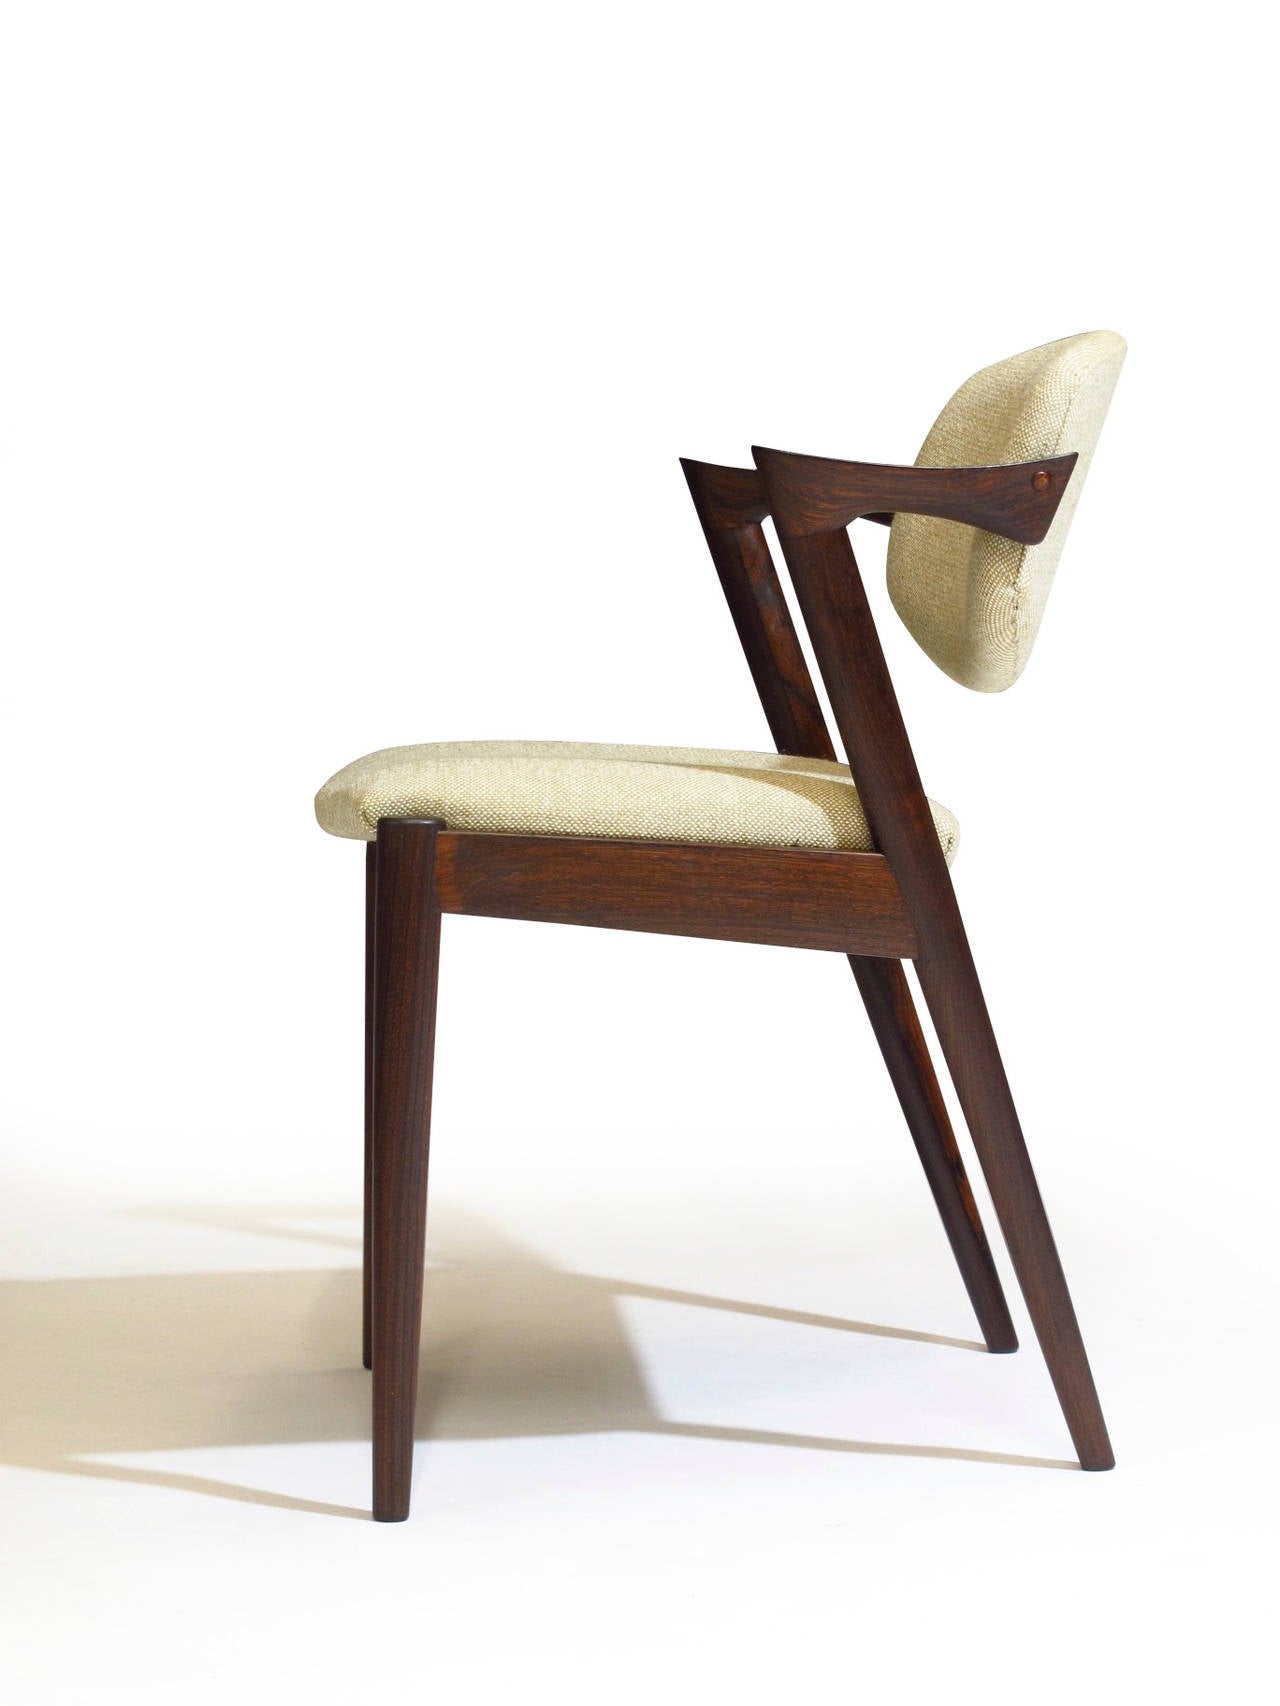 Six Rosewood Kai Kristiansen Danish Dining Chairs  14 Available 2